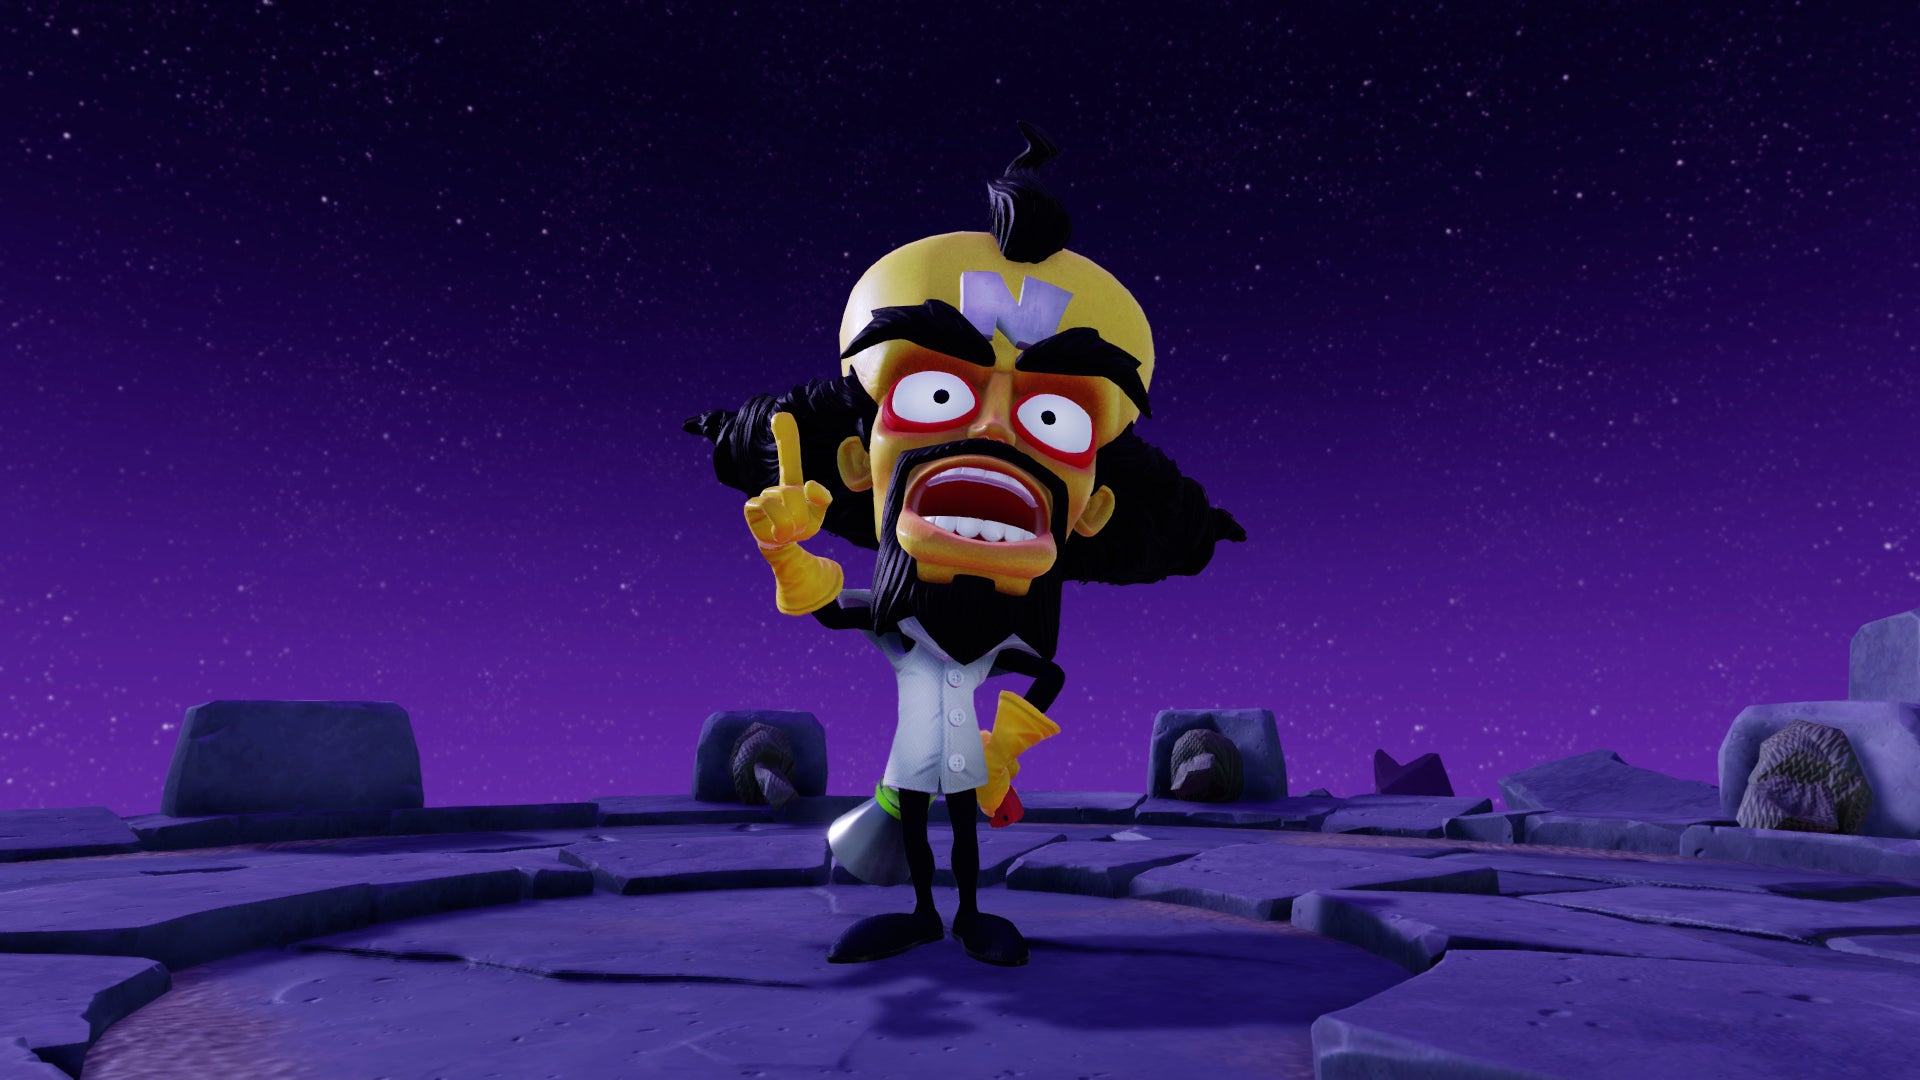 Image for Crash Bandicoot's enemy, Neo Cortex, is also coming to Skylanders: Imaginators